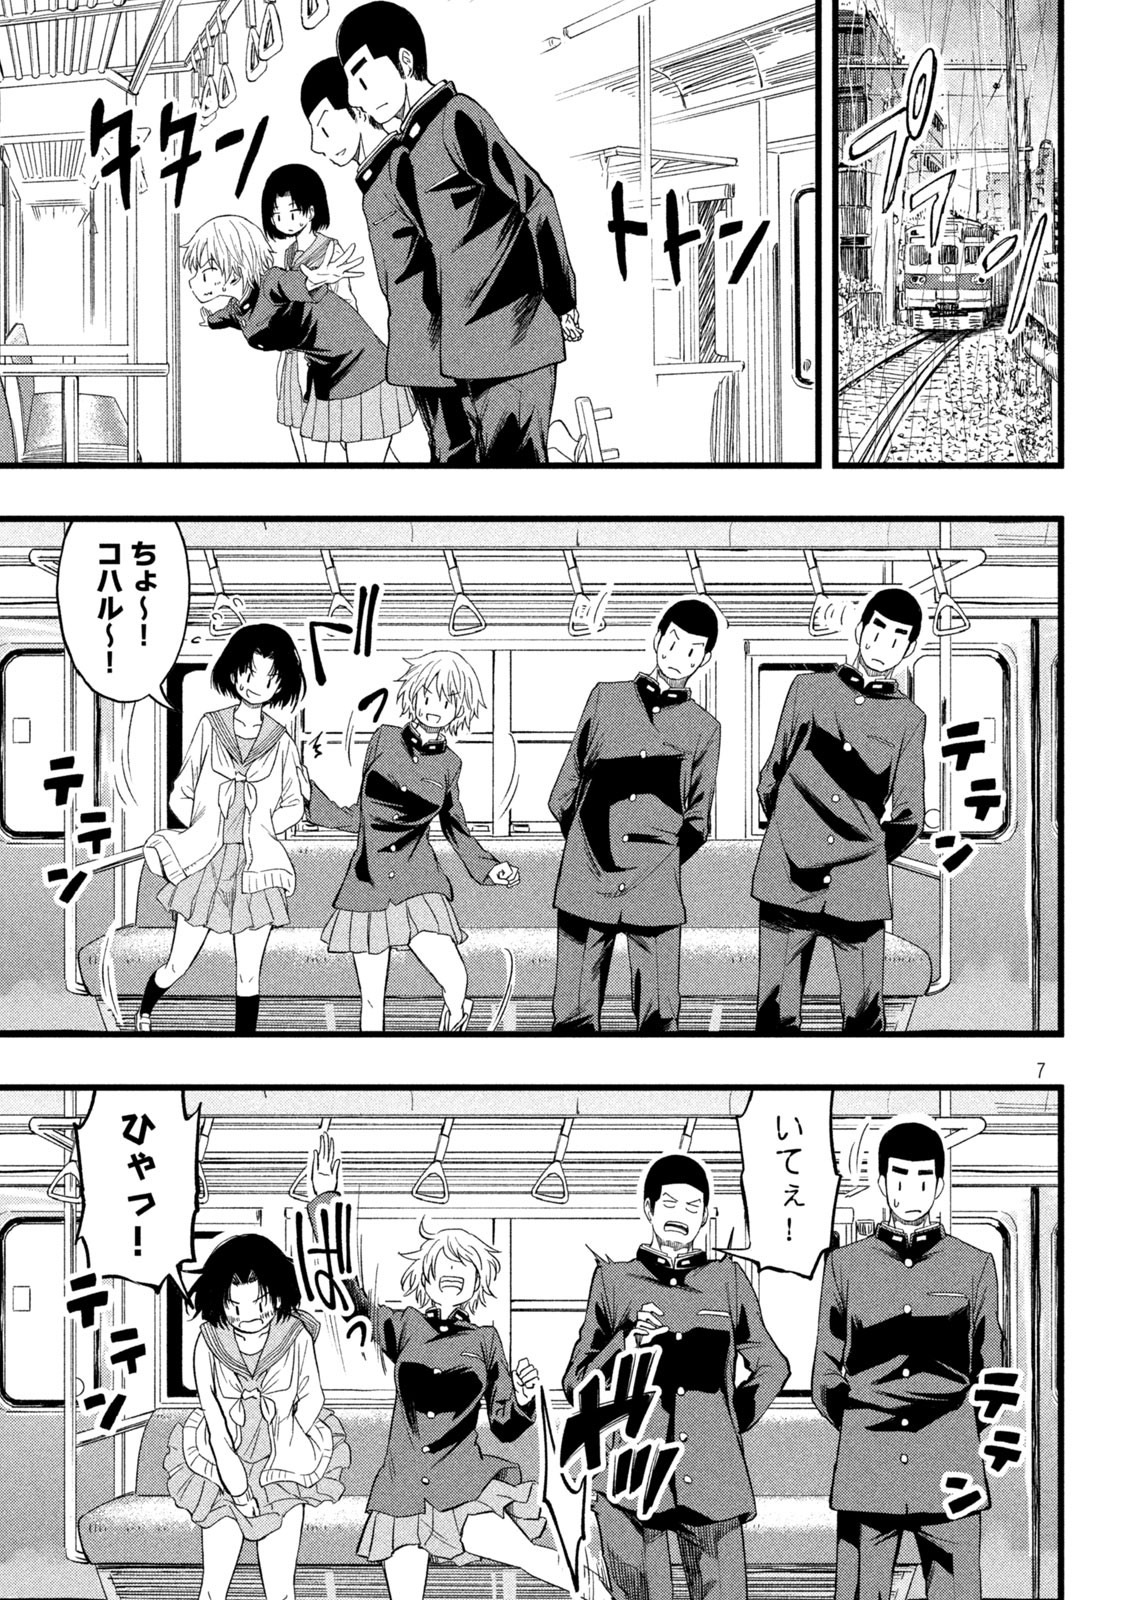 Koharu haru! - Chapter 49 - Page 3